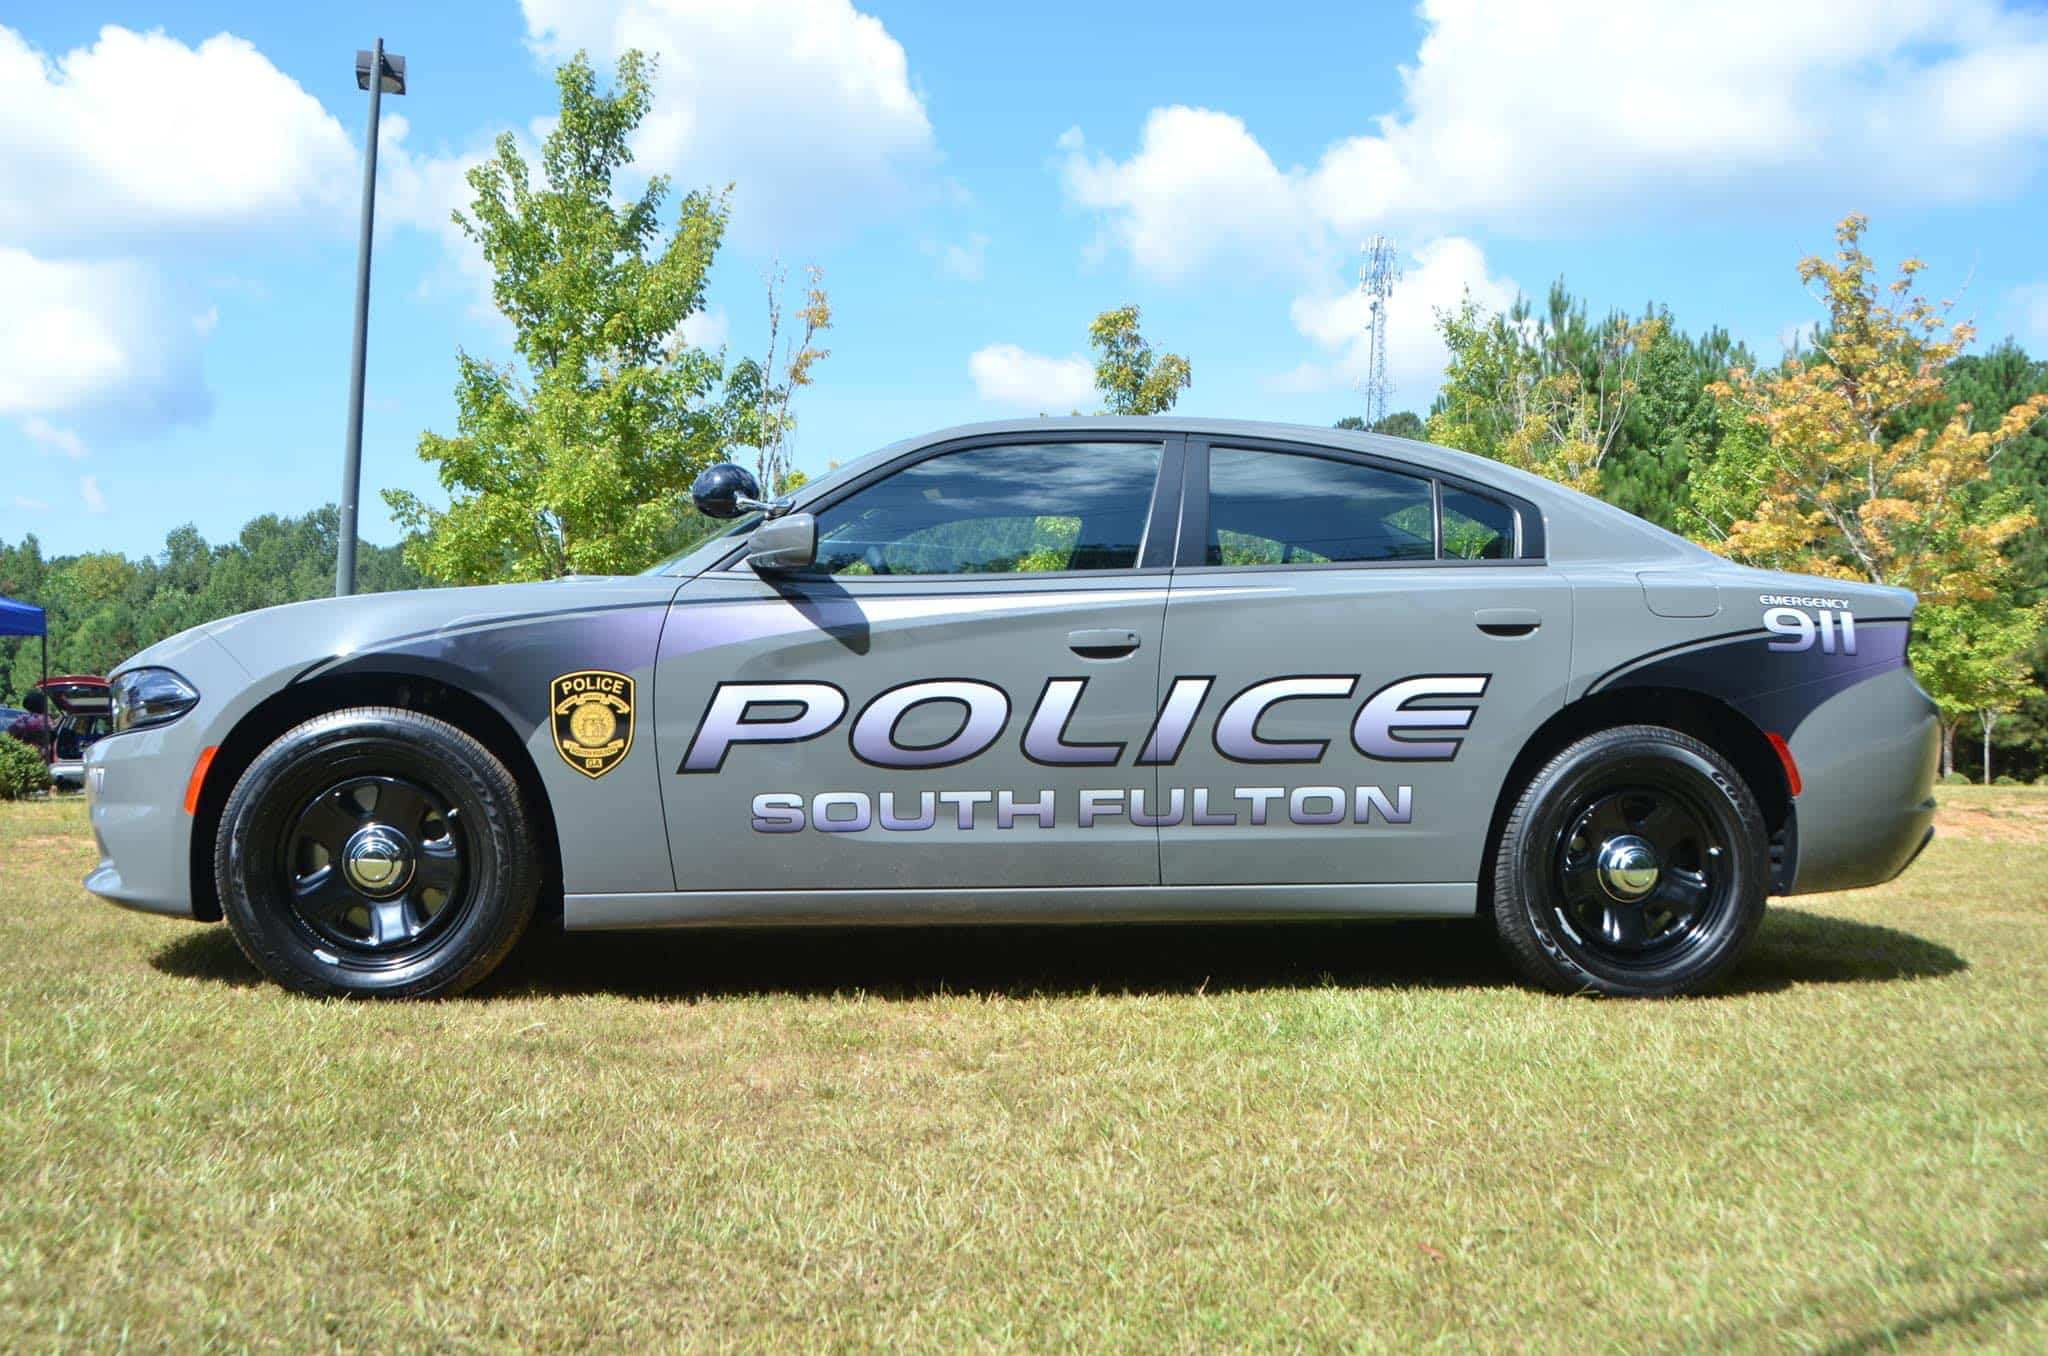 When Fun Goes Too Far: South Fulton Police Tackle Toy Gun Dangers